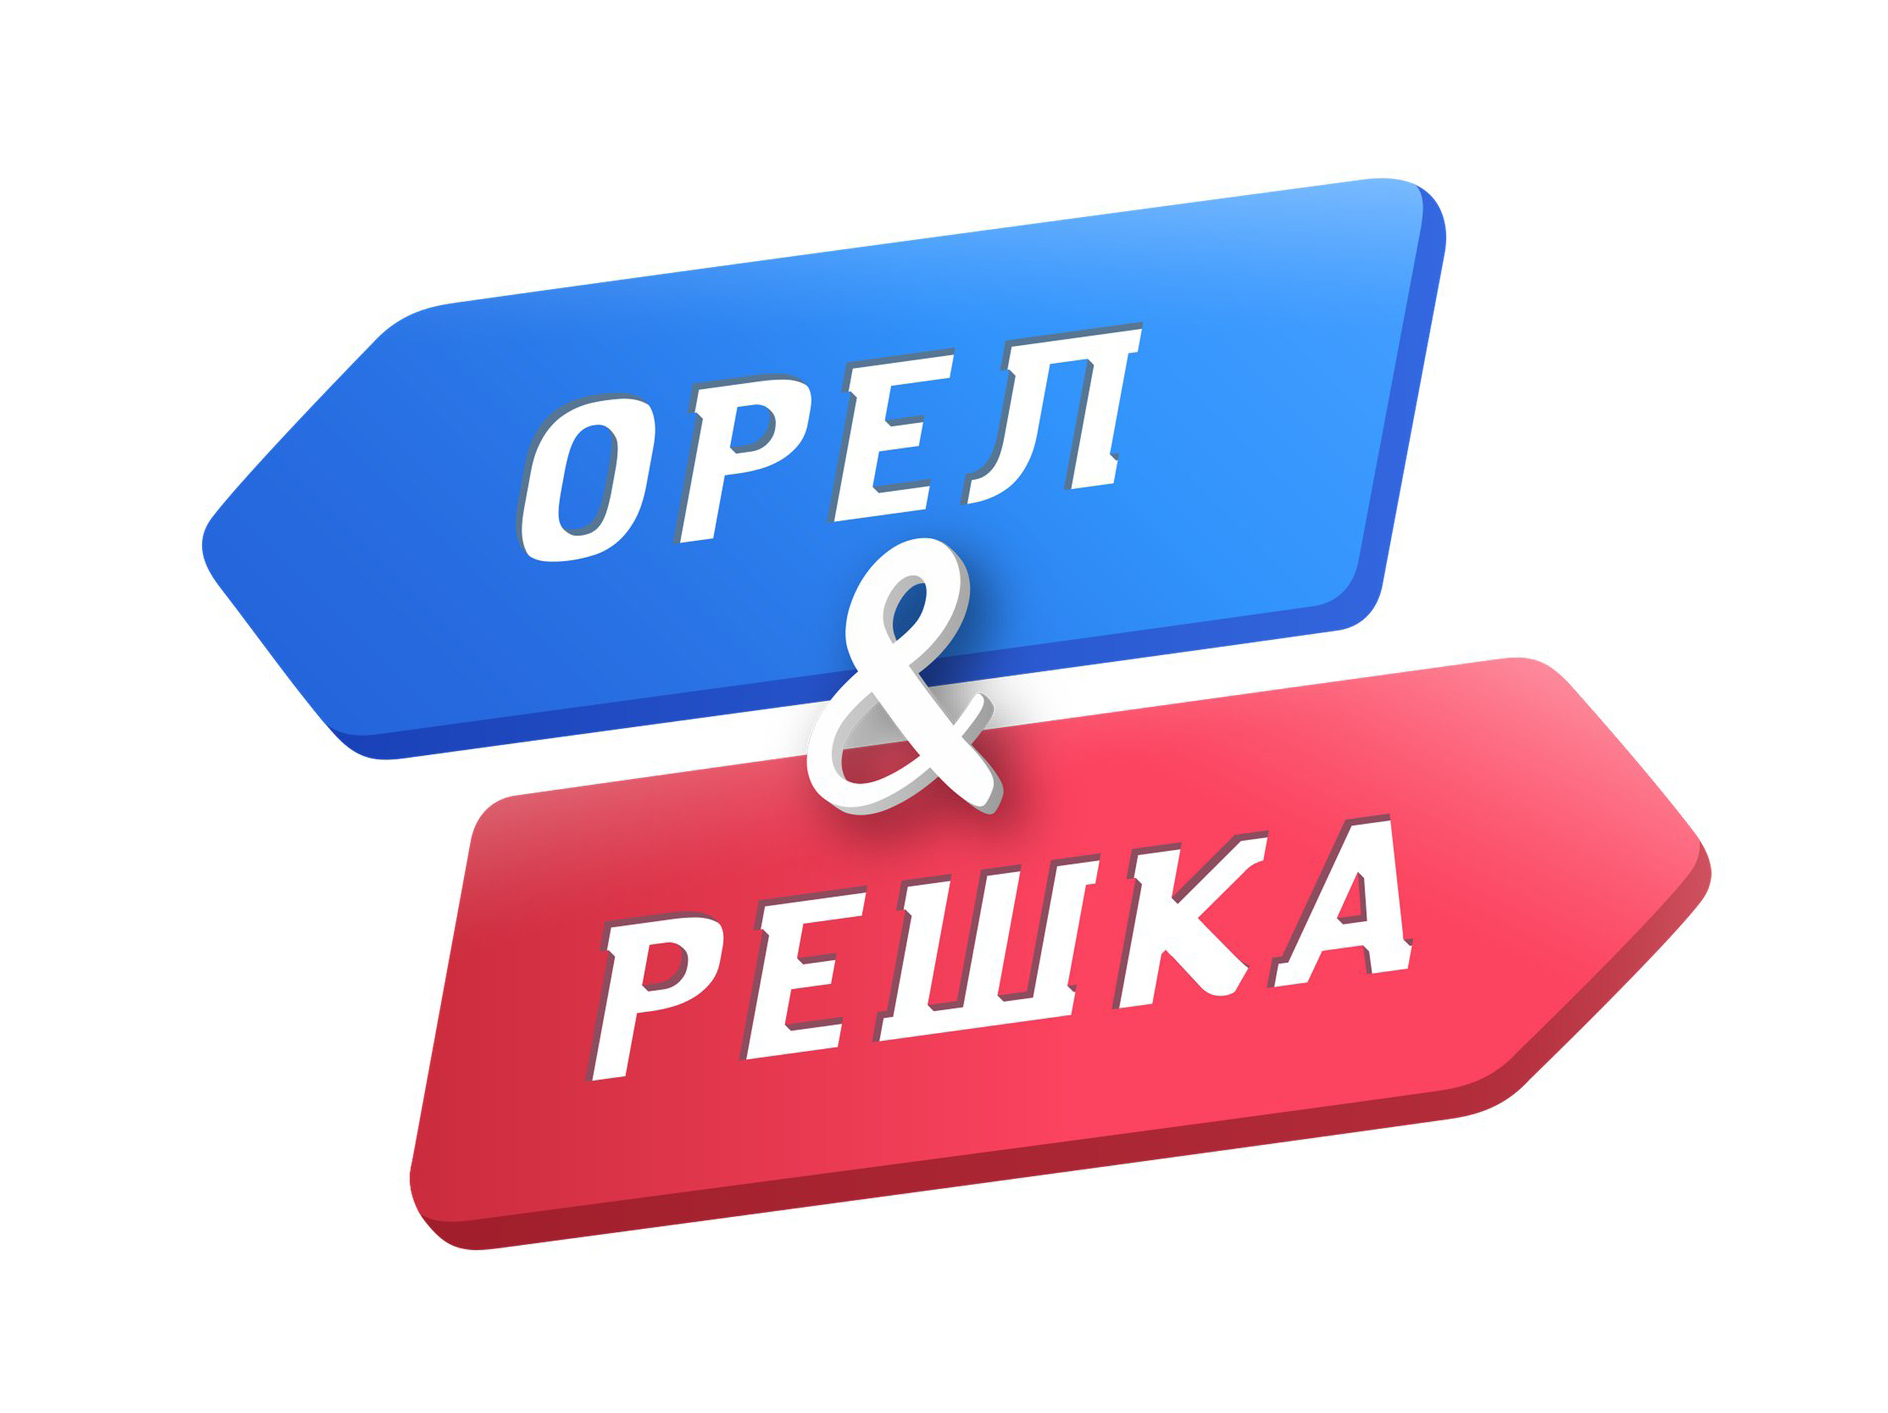 Орёл_и_решка_(логотип_телепередачи)